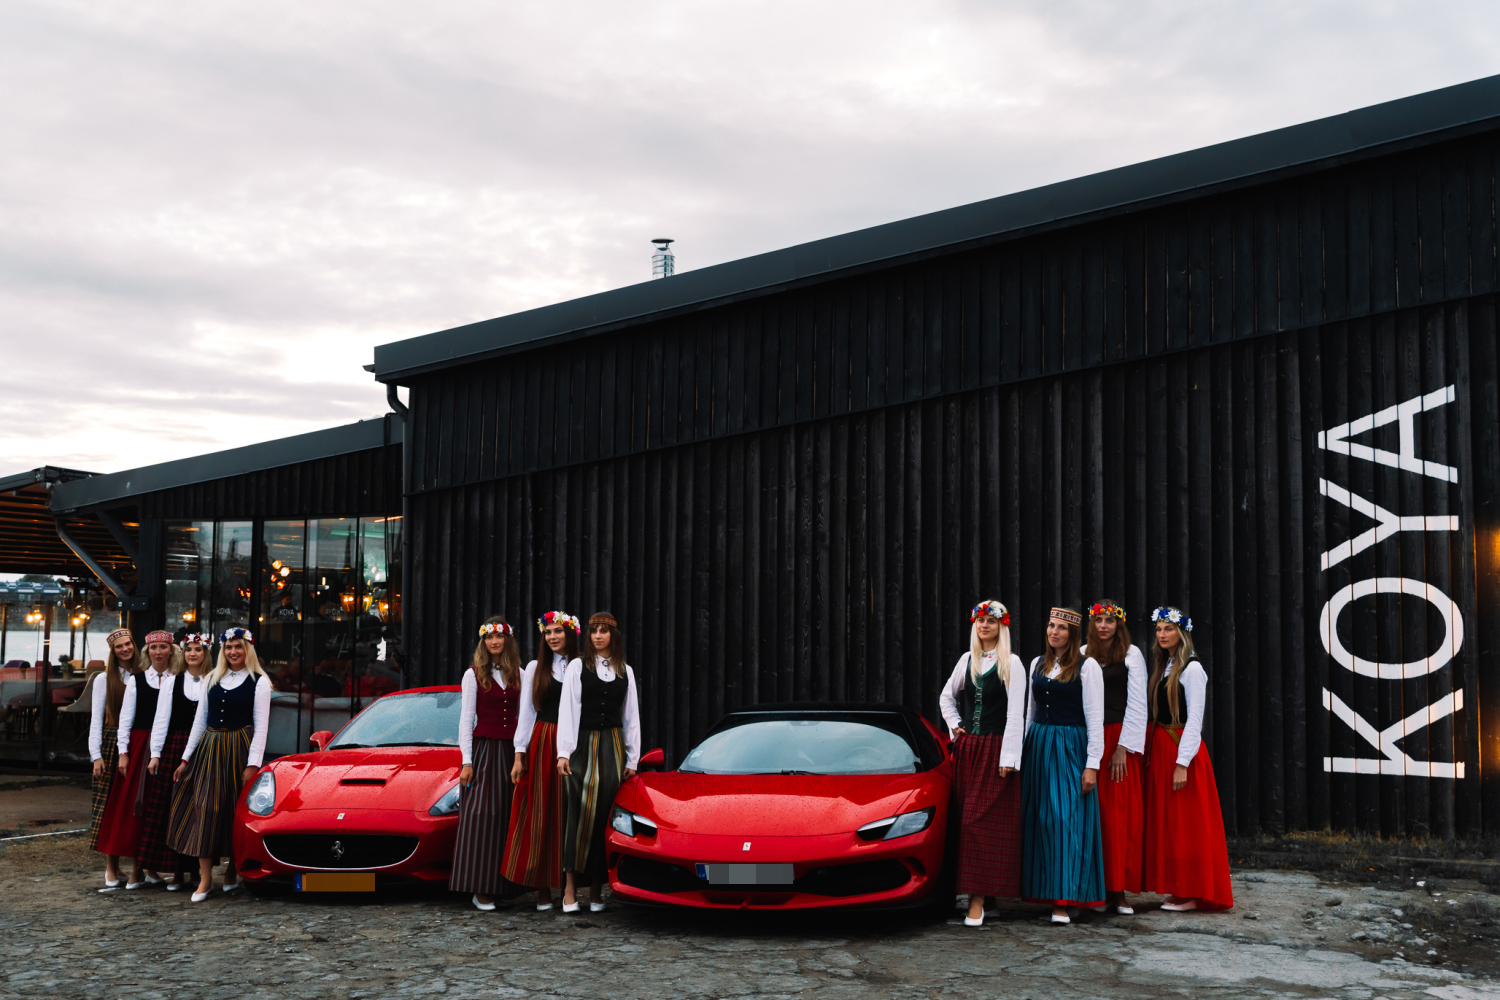 SFC Riga grid girls and Ferraris. 